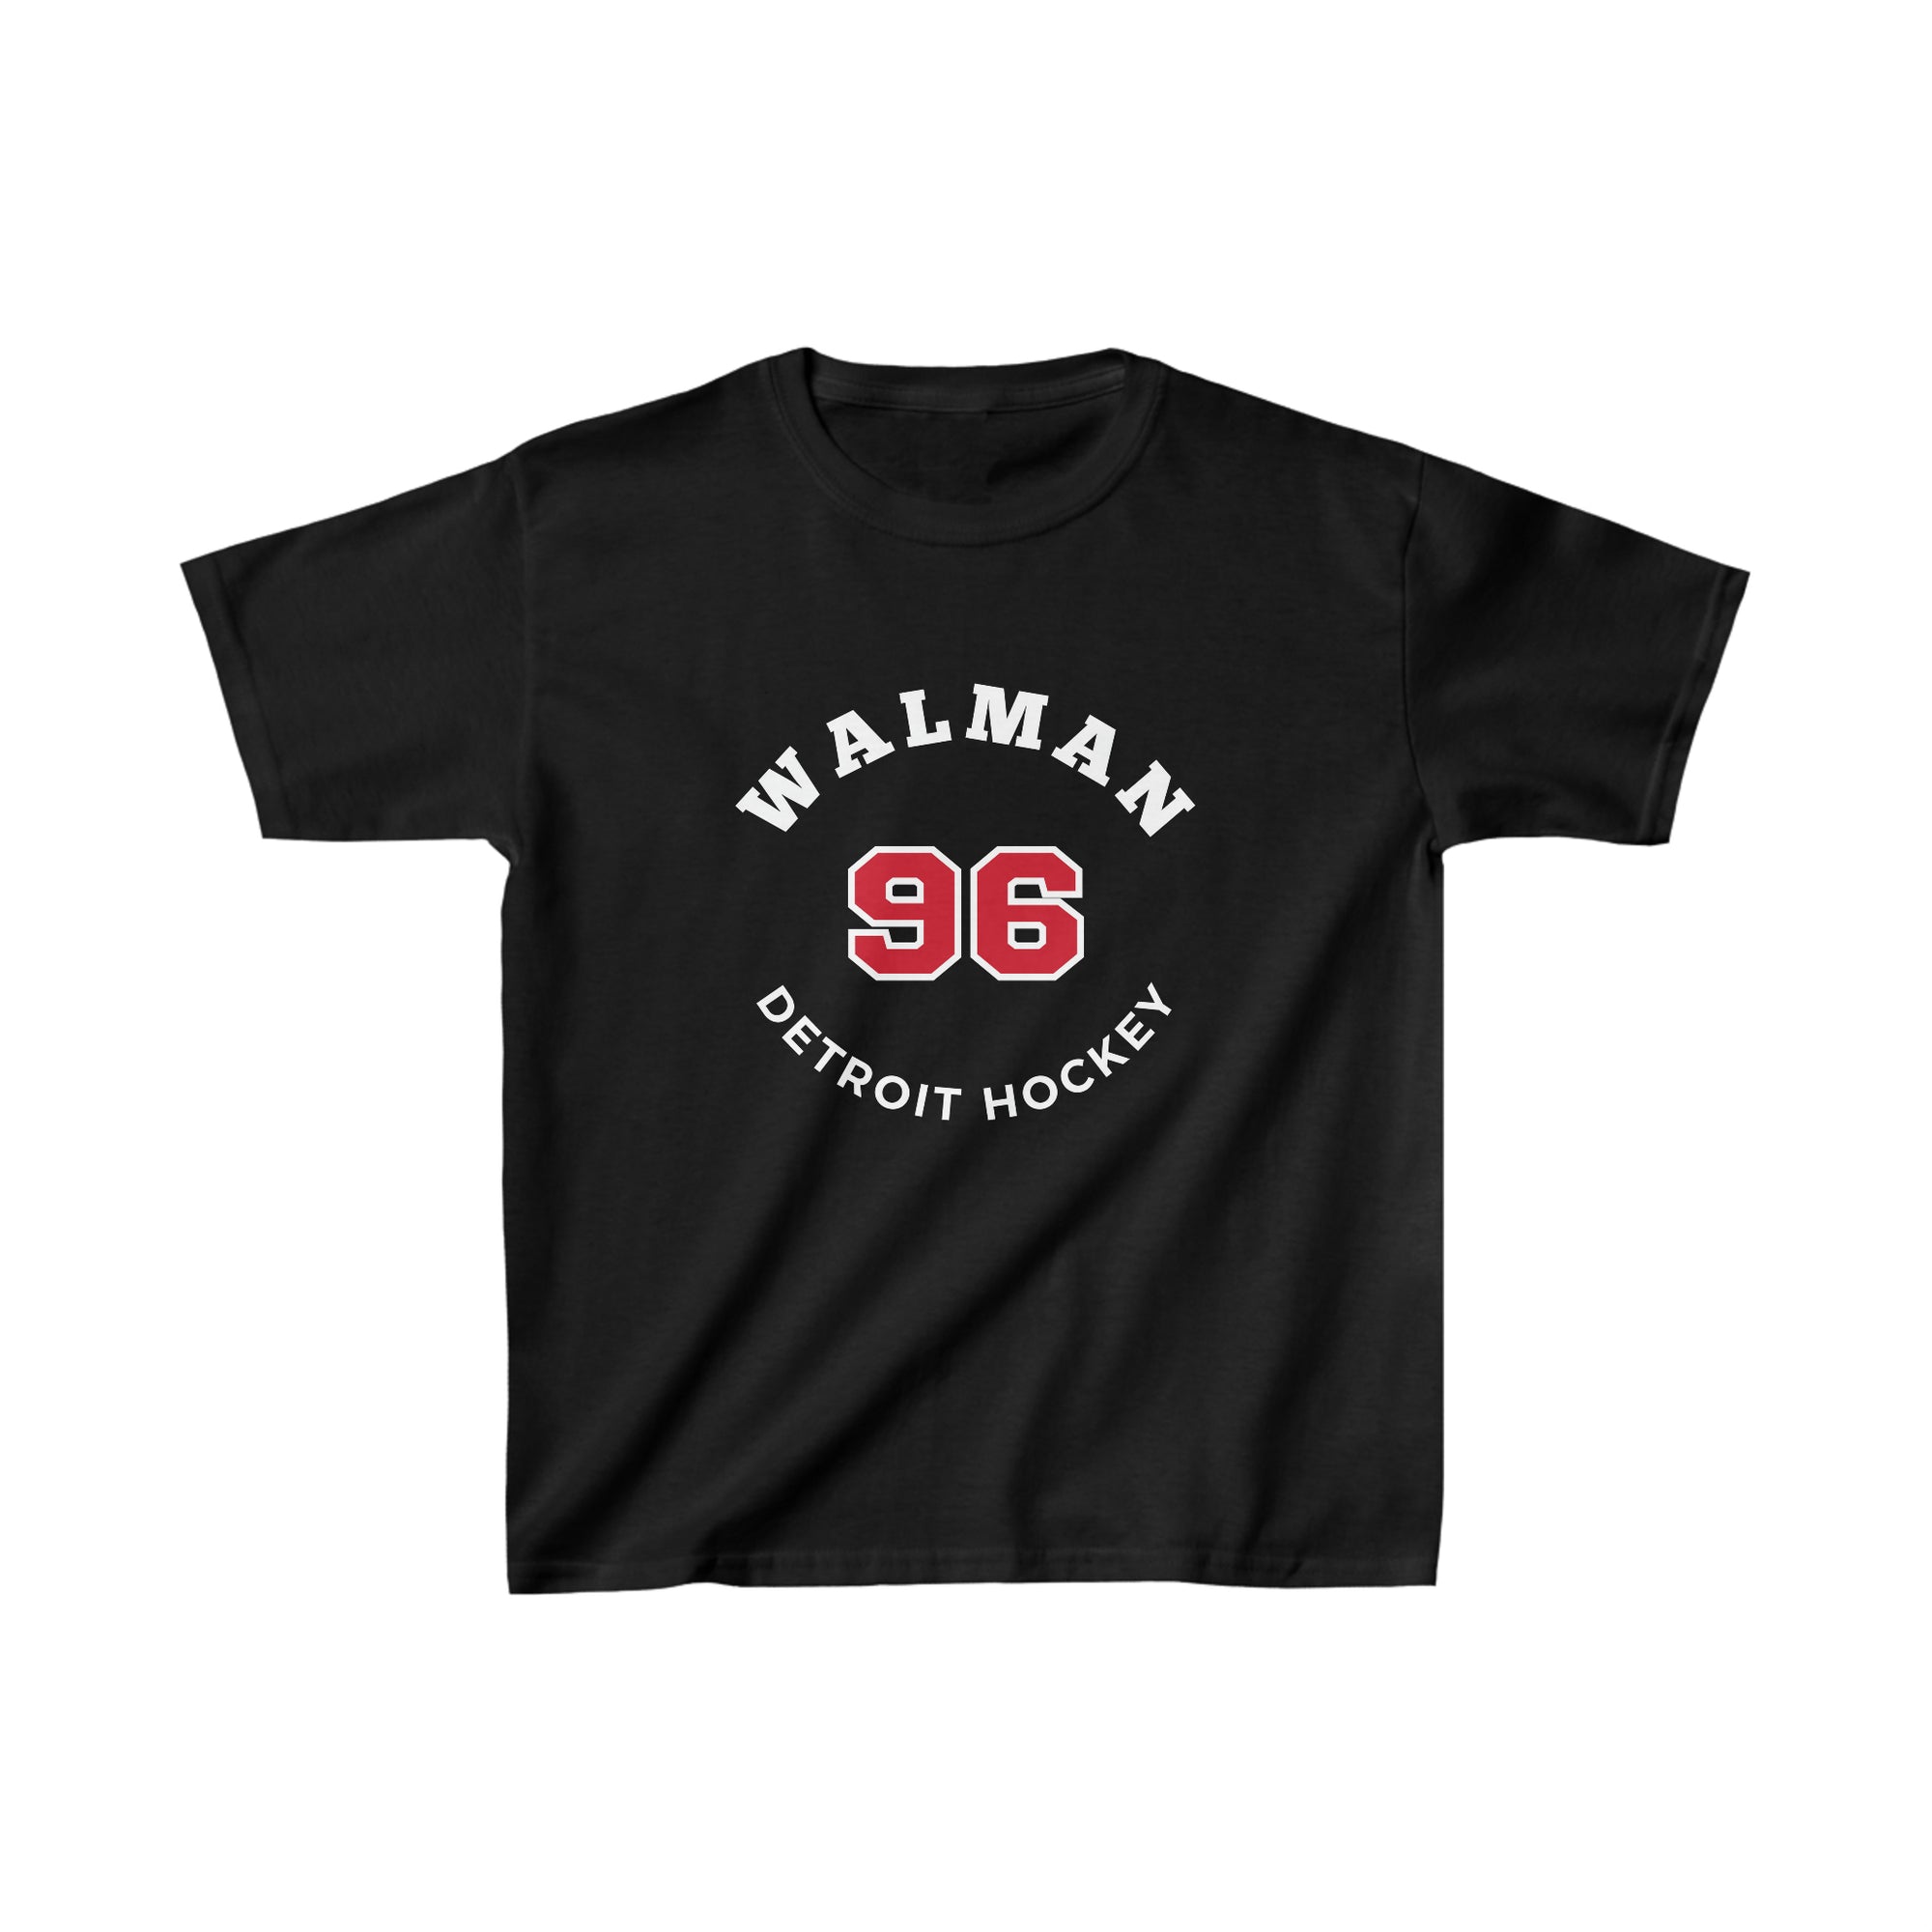 Walman 96 Detroit Hockey Number Arch Design Kids Tee